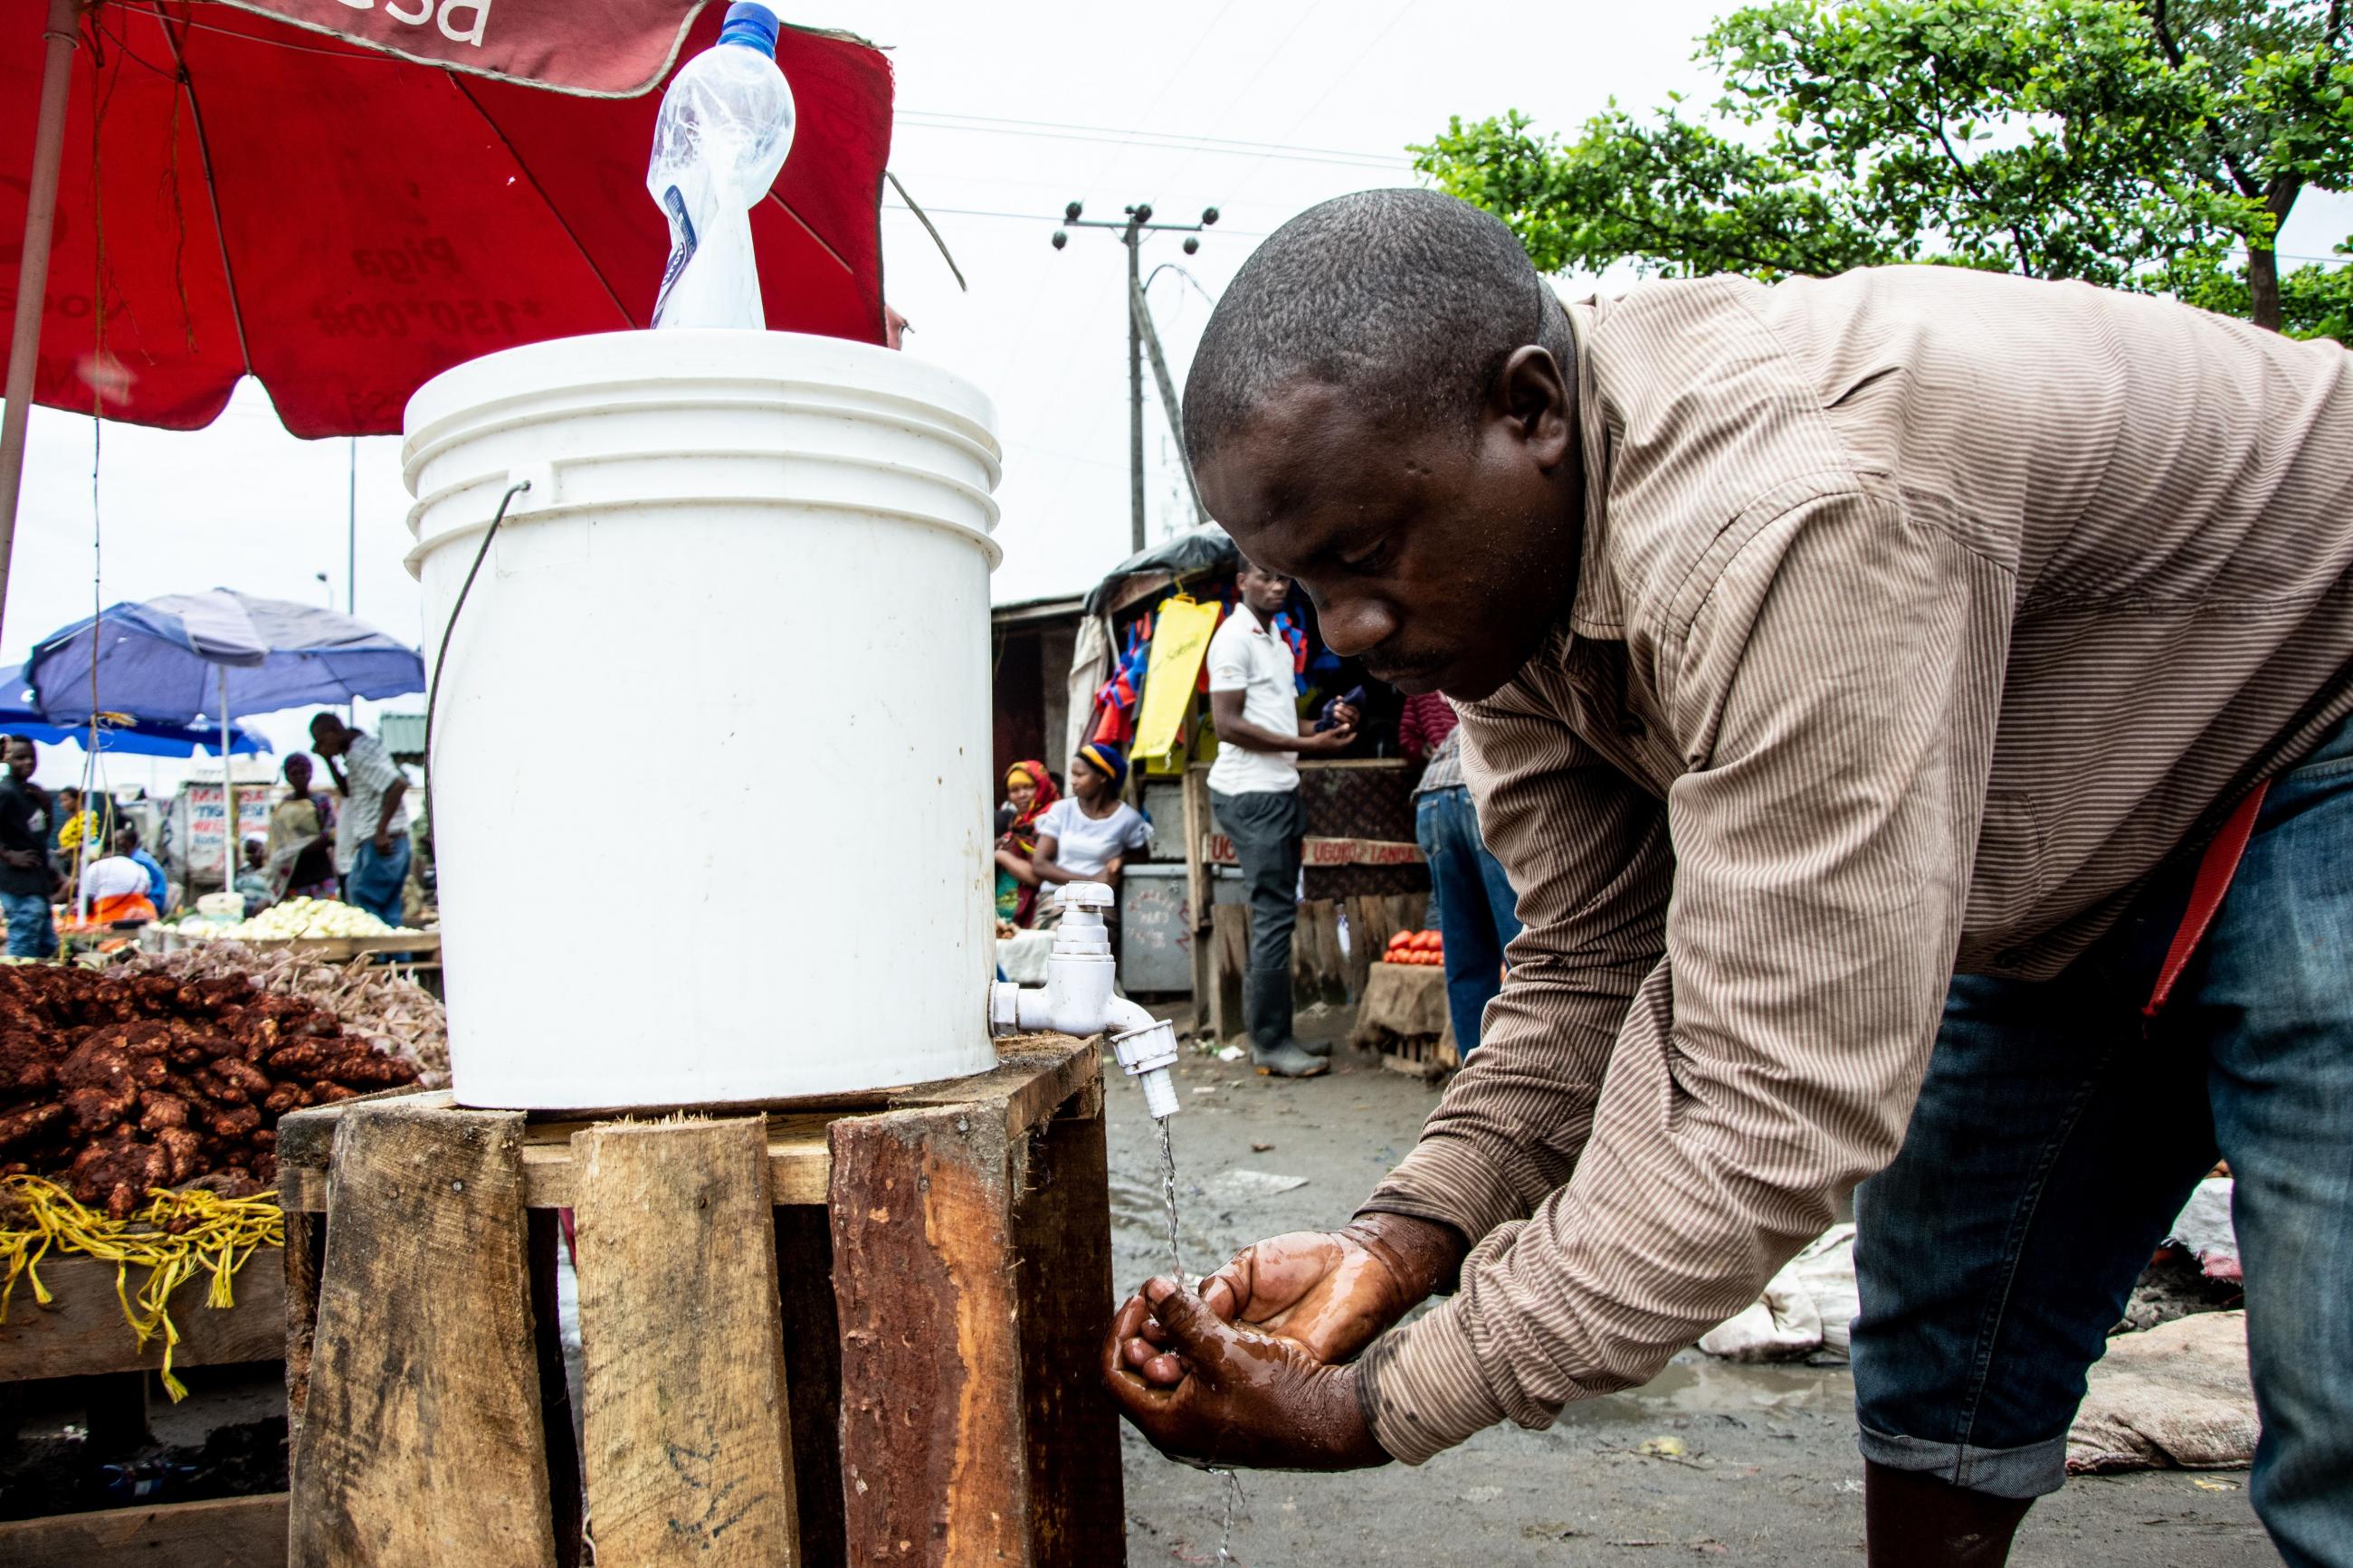 A man washes his hands with chlorinated water at the Mabibo market in Dar es Salaam, Tanzania on April 16, 2020.